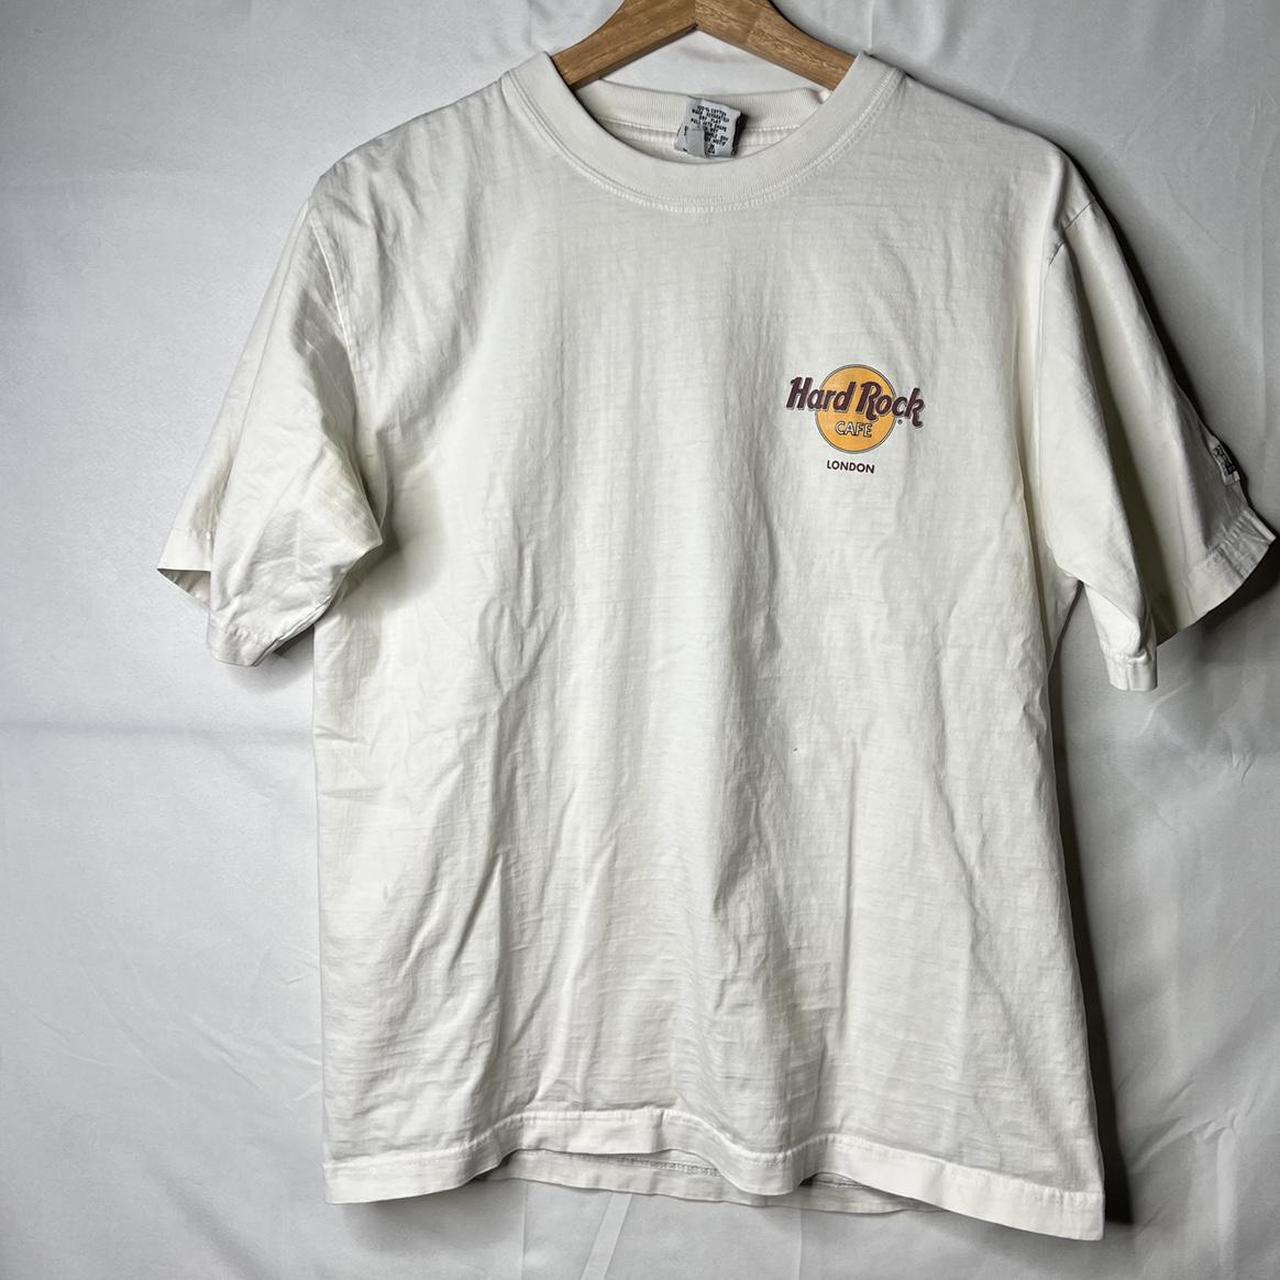 Product Image 2 - Hard Rock London T-Shirt

Size M.